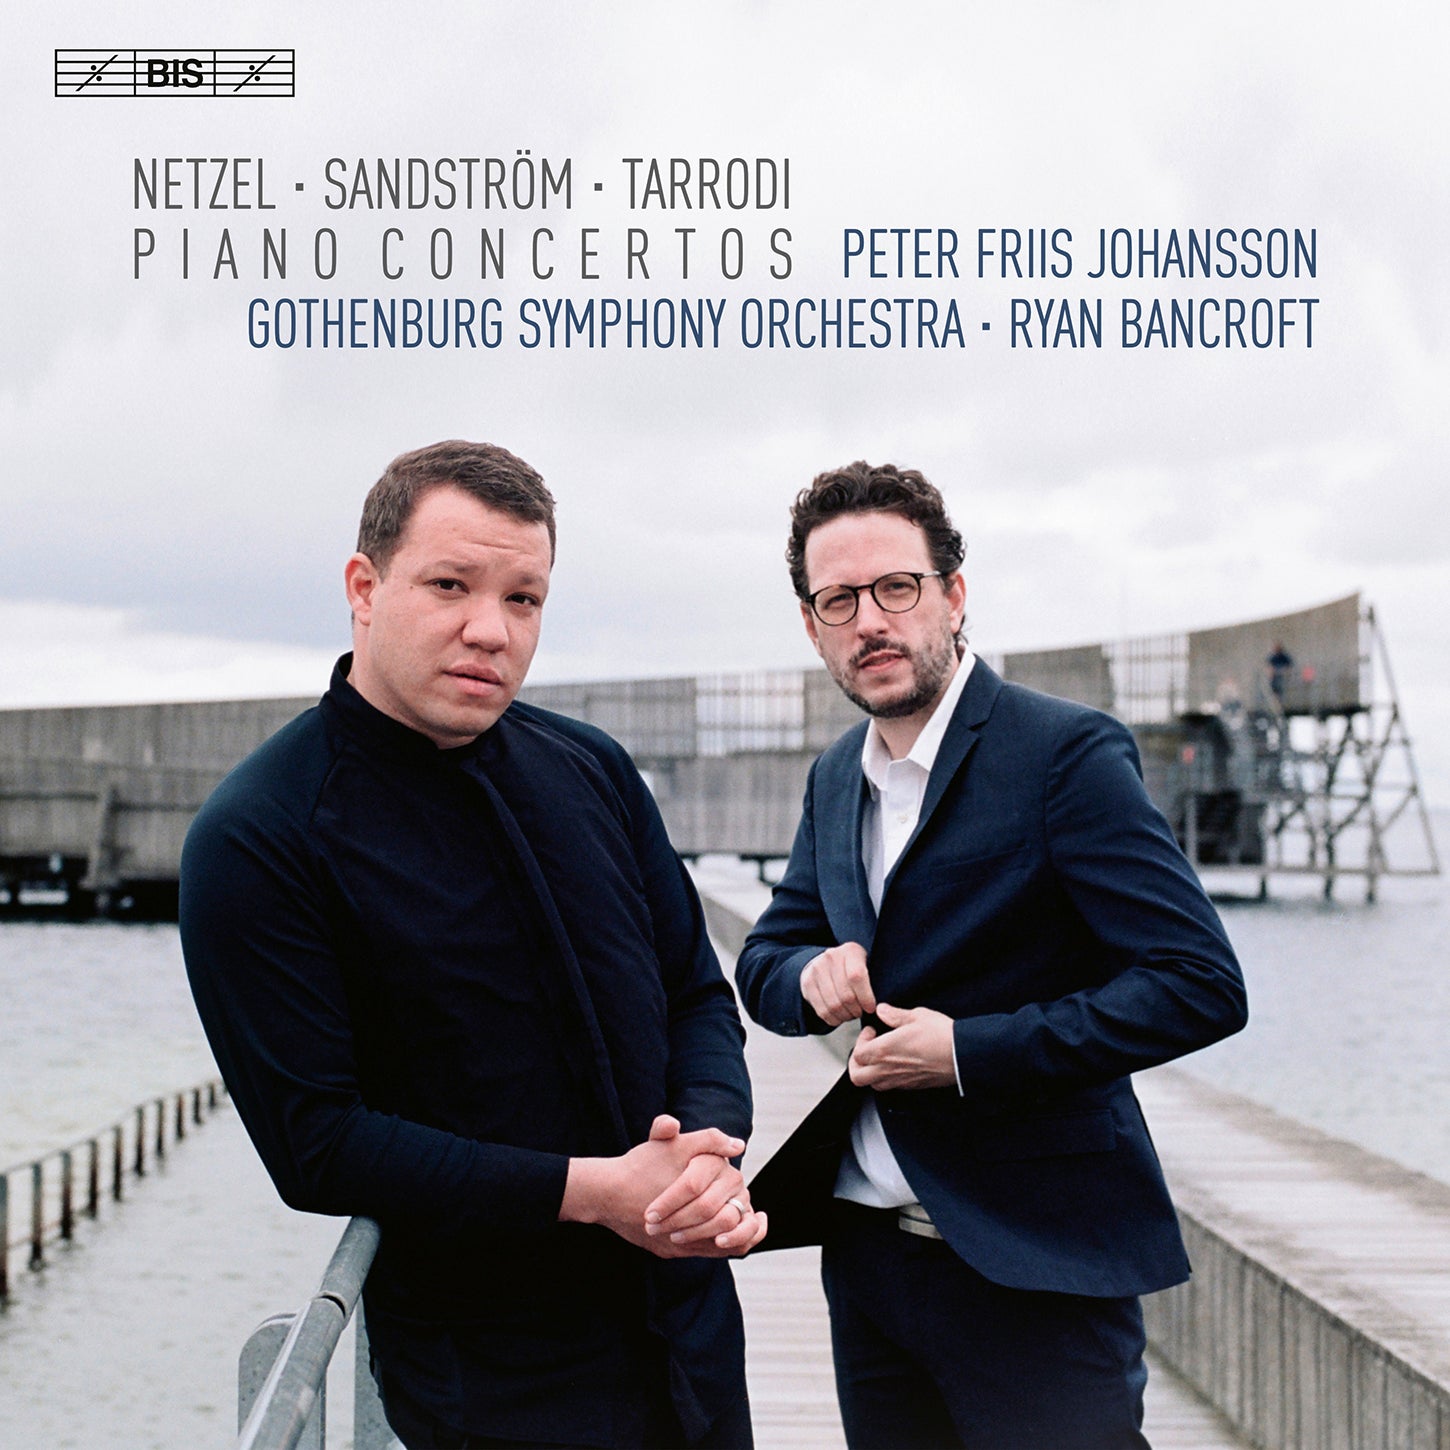 Netzel, Sandstrom & Tarrodi: Piano Concertos / Johansson, Bancroft, Gothenburg Symphony